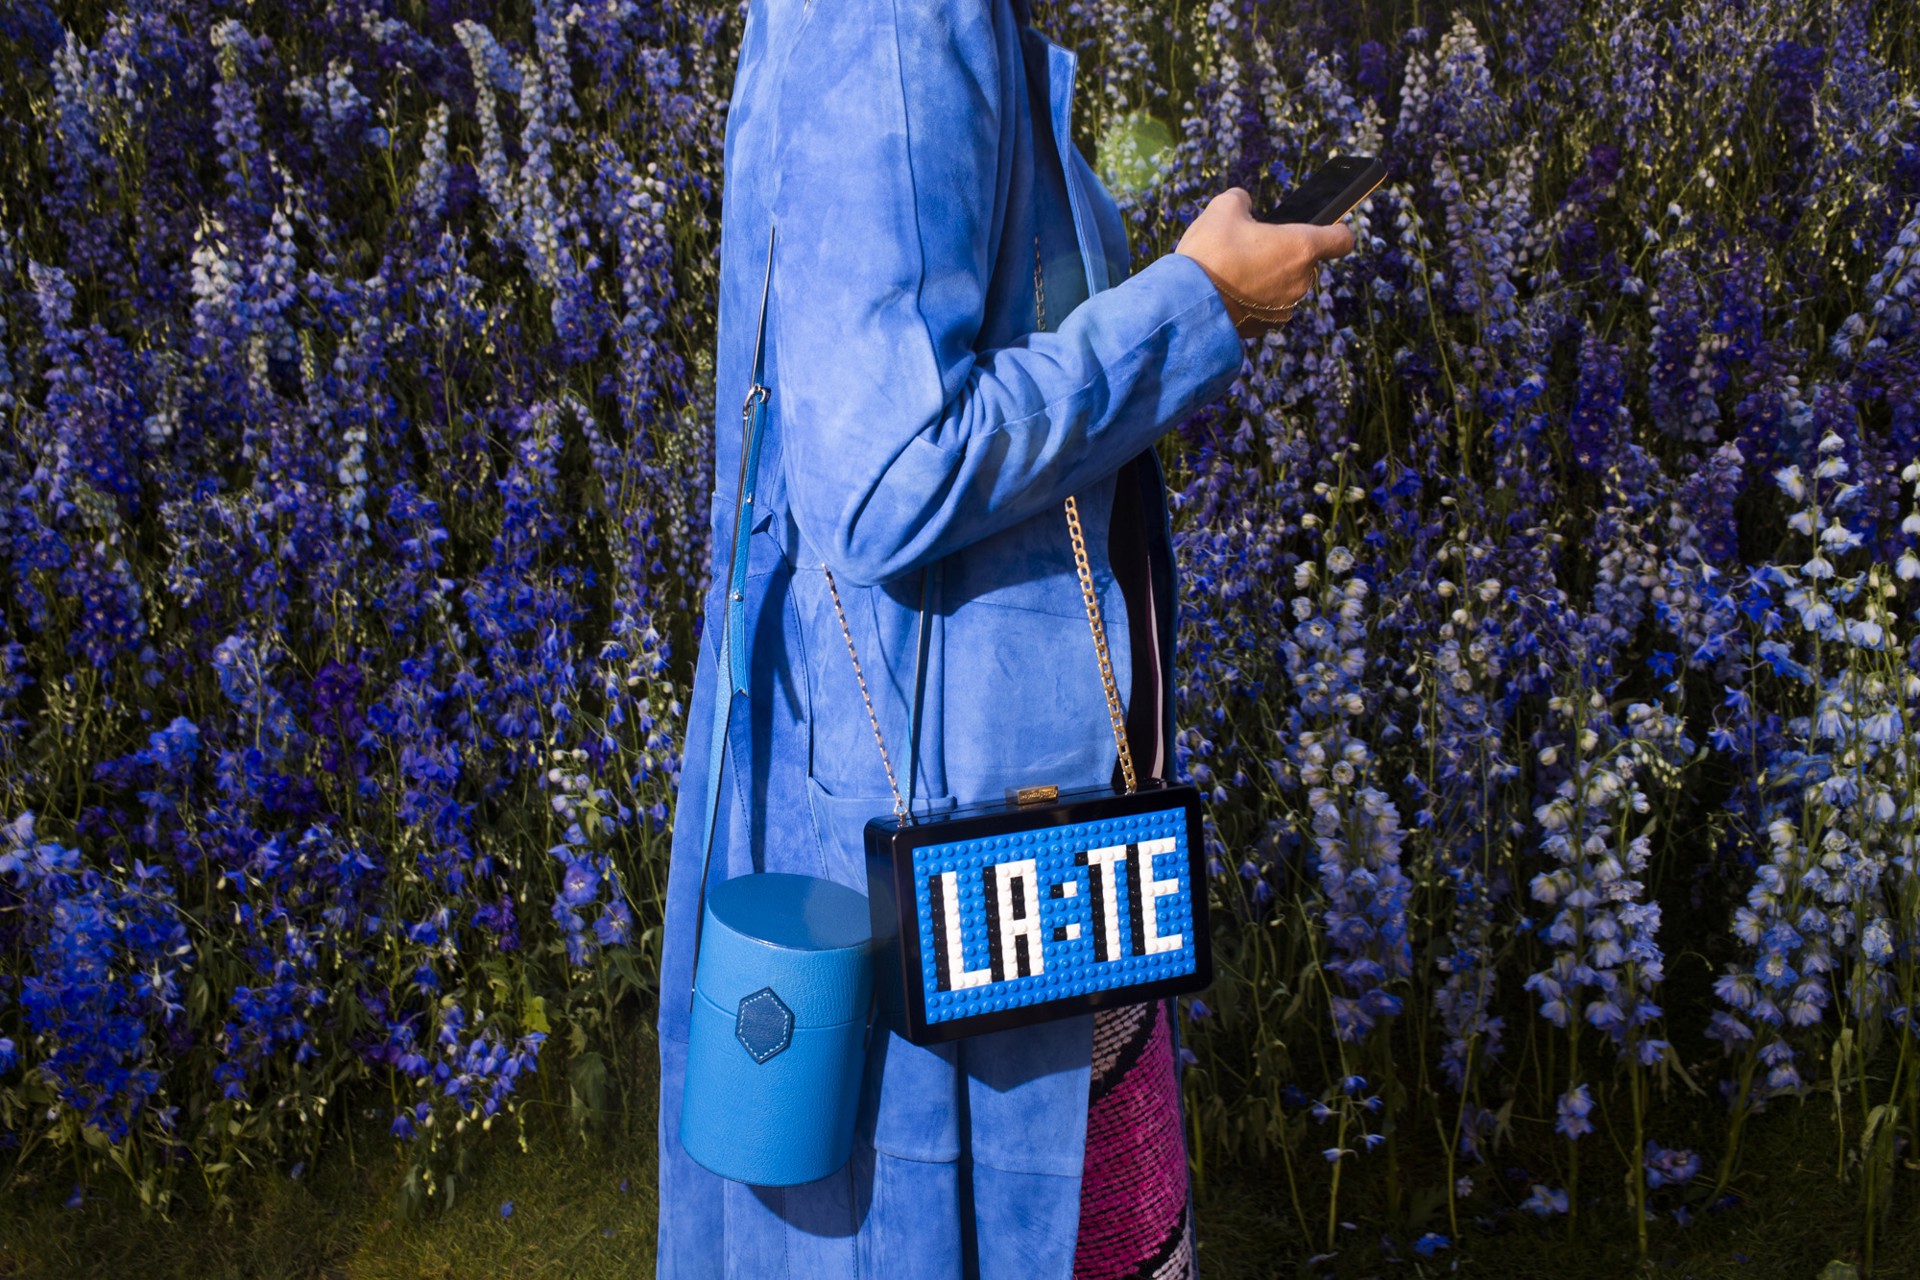 Dior LATE, Out of Fashion series, Paris by Landon Nordeman